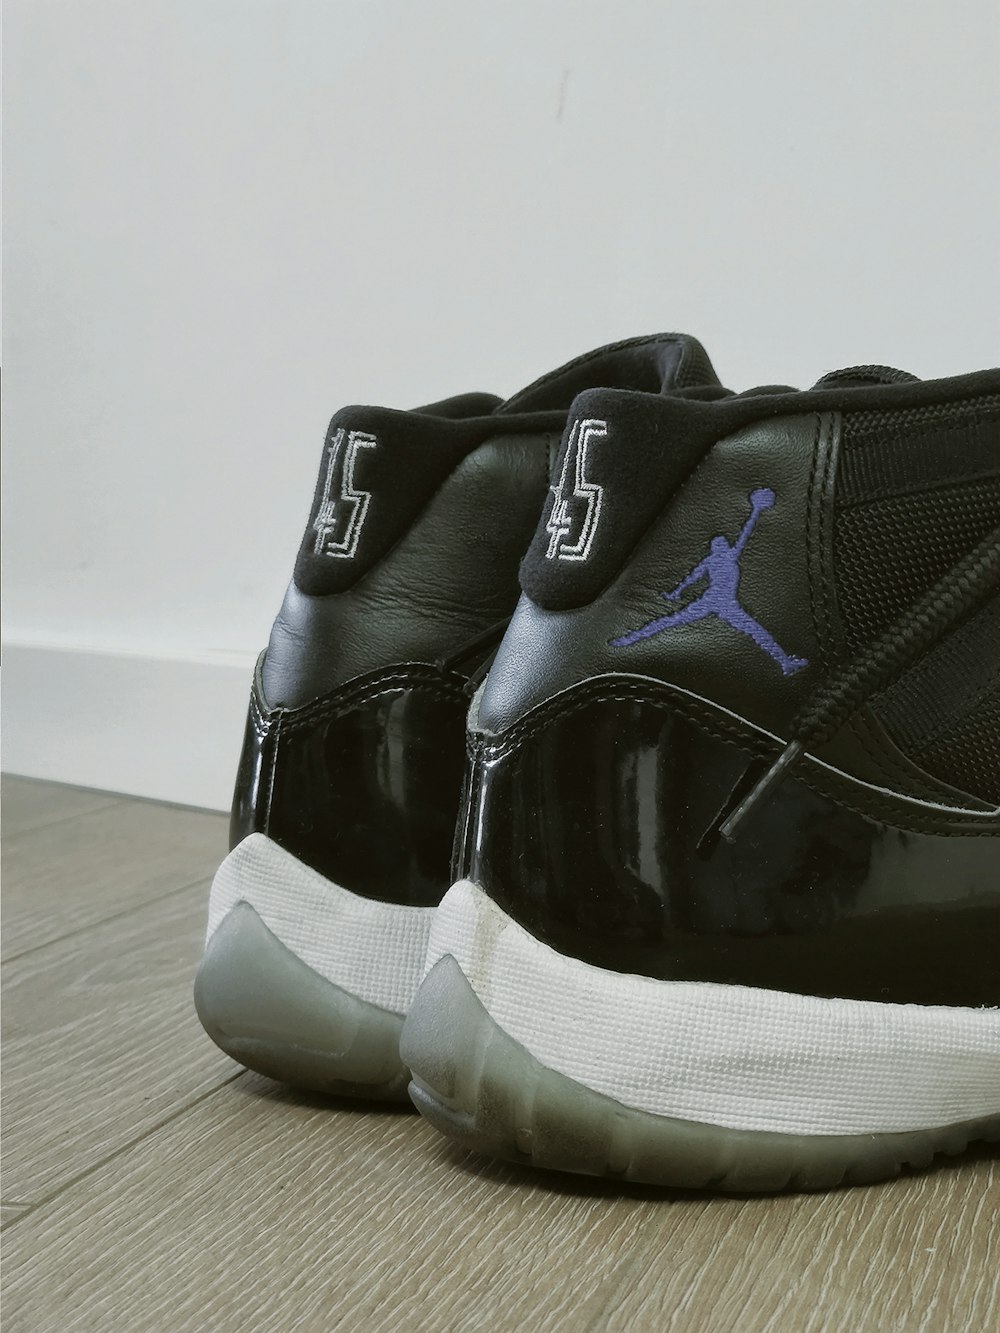 Foto par de zapatos de baloncesto Air Jordan negros – Imagen China gratis en  Unsplash